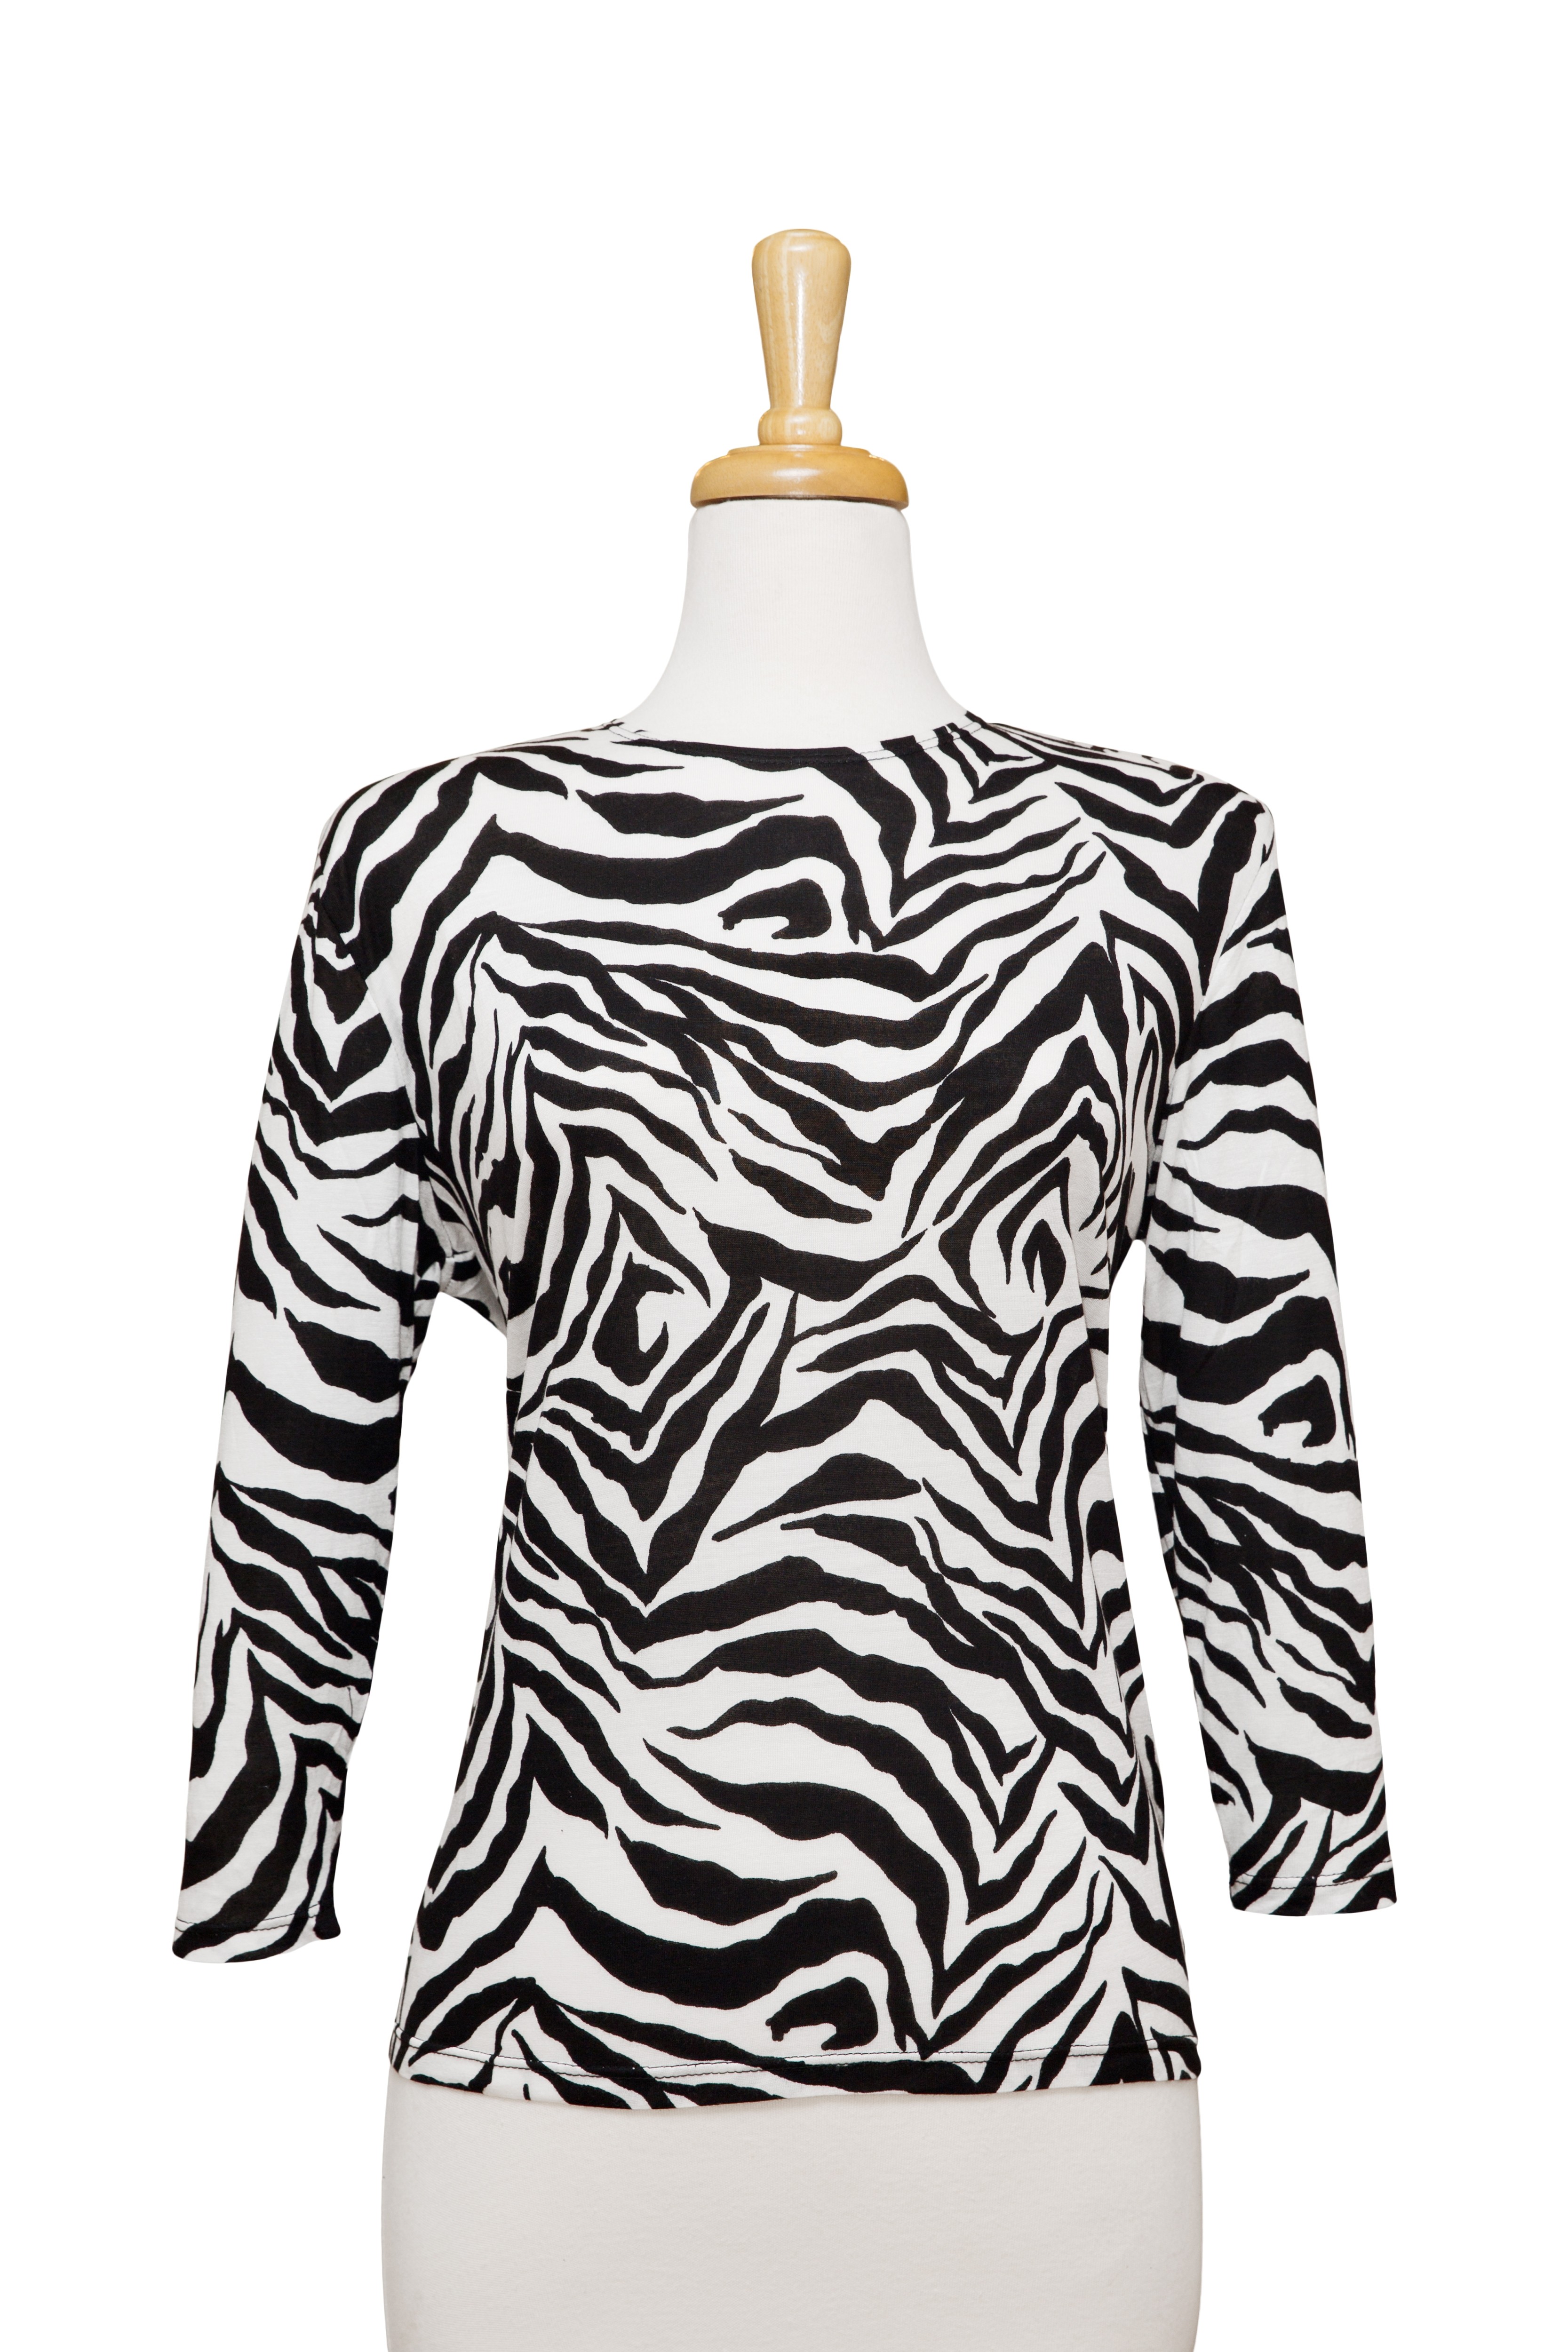 Plus Size Black and White Zebra 3/4 Sleeve  Cotton Top 